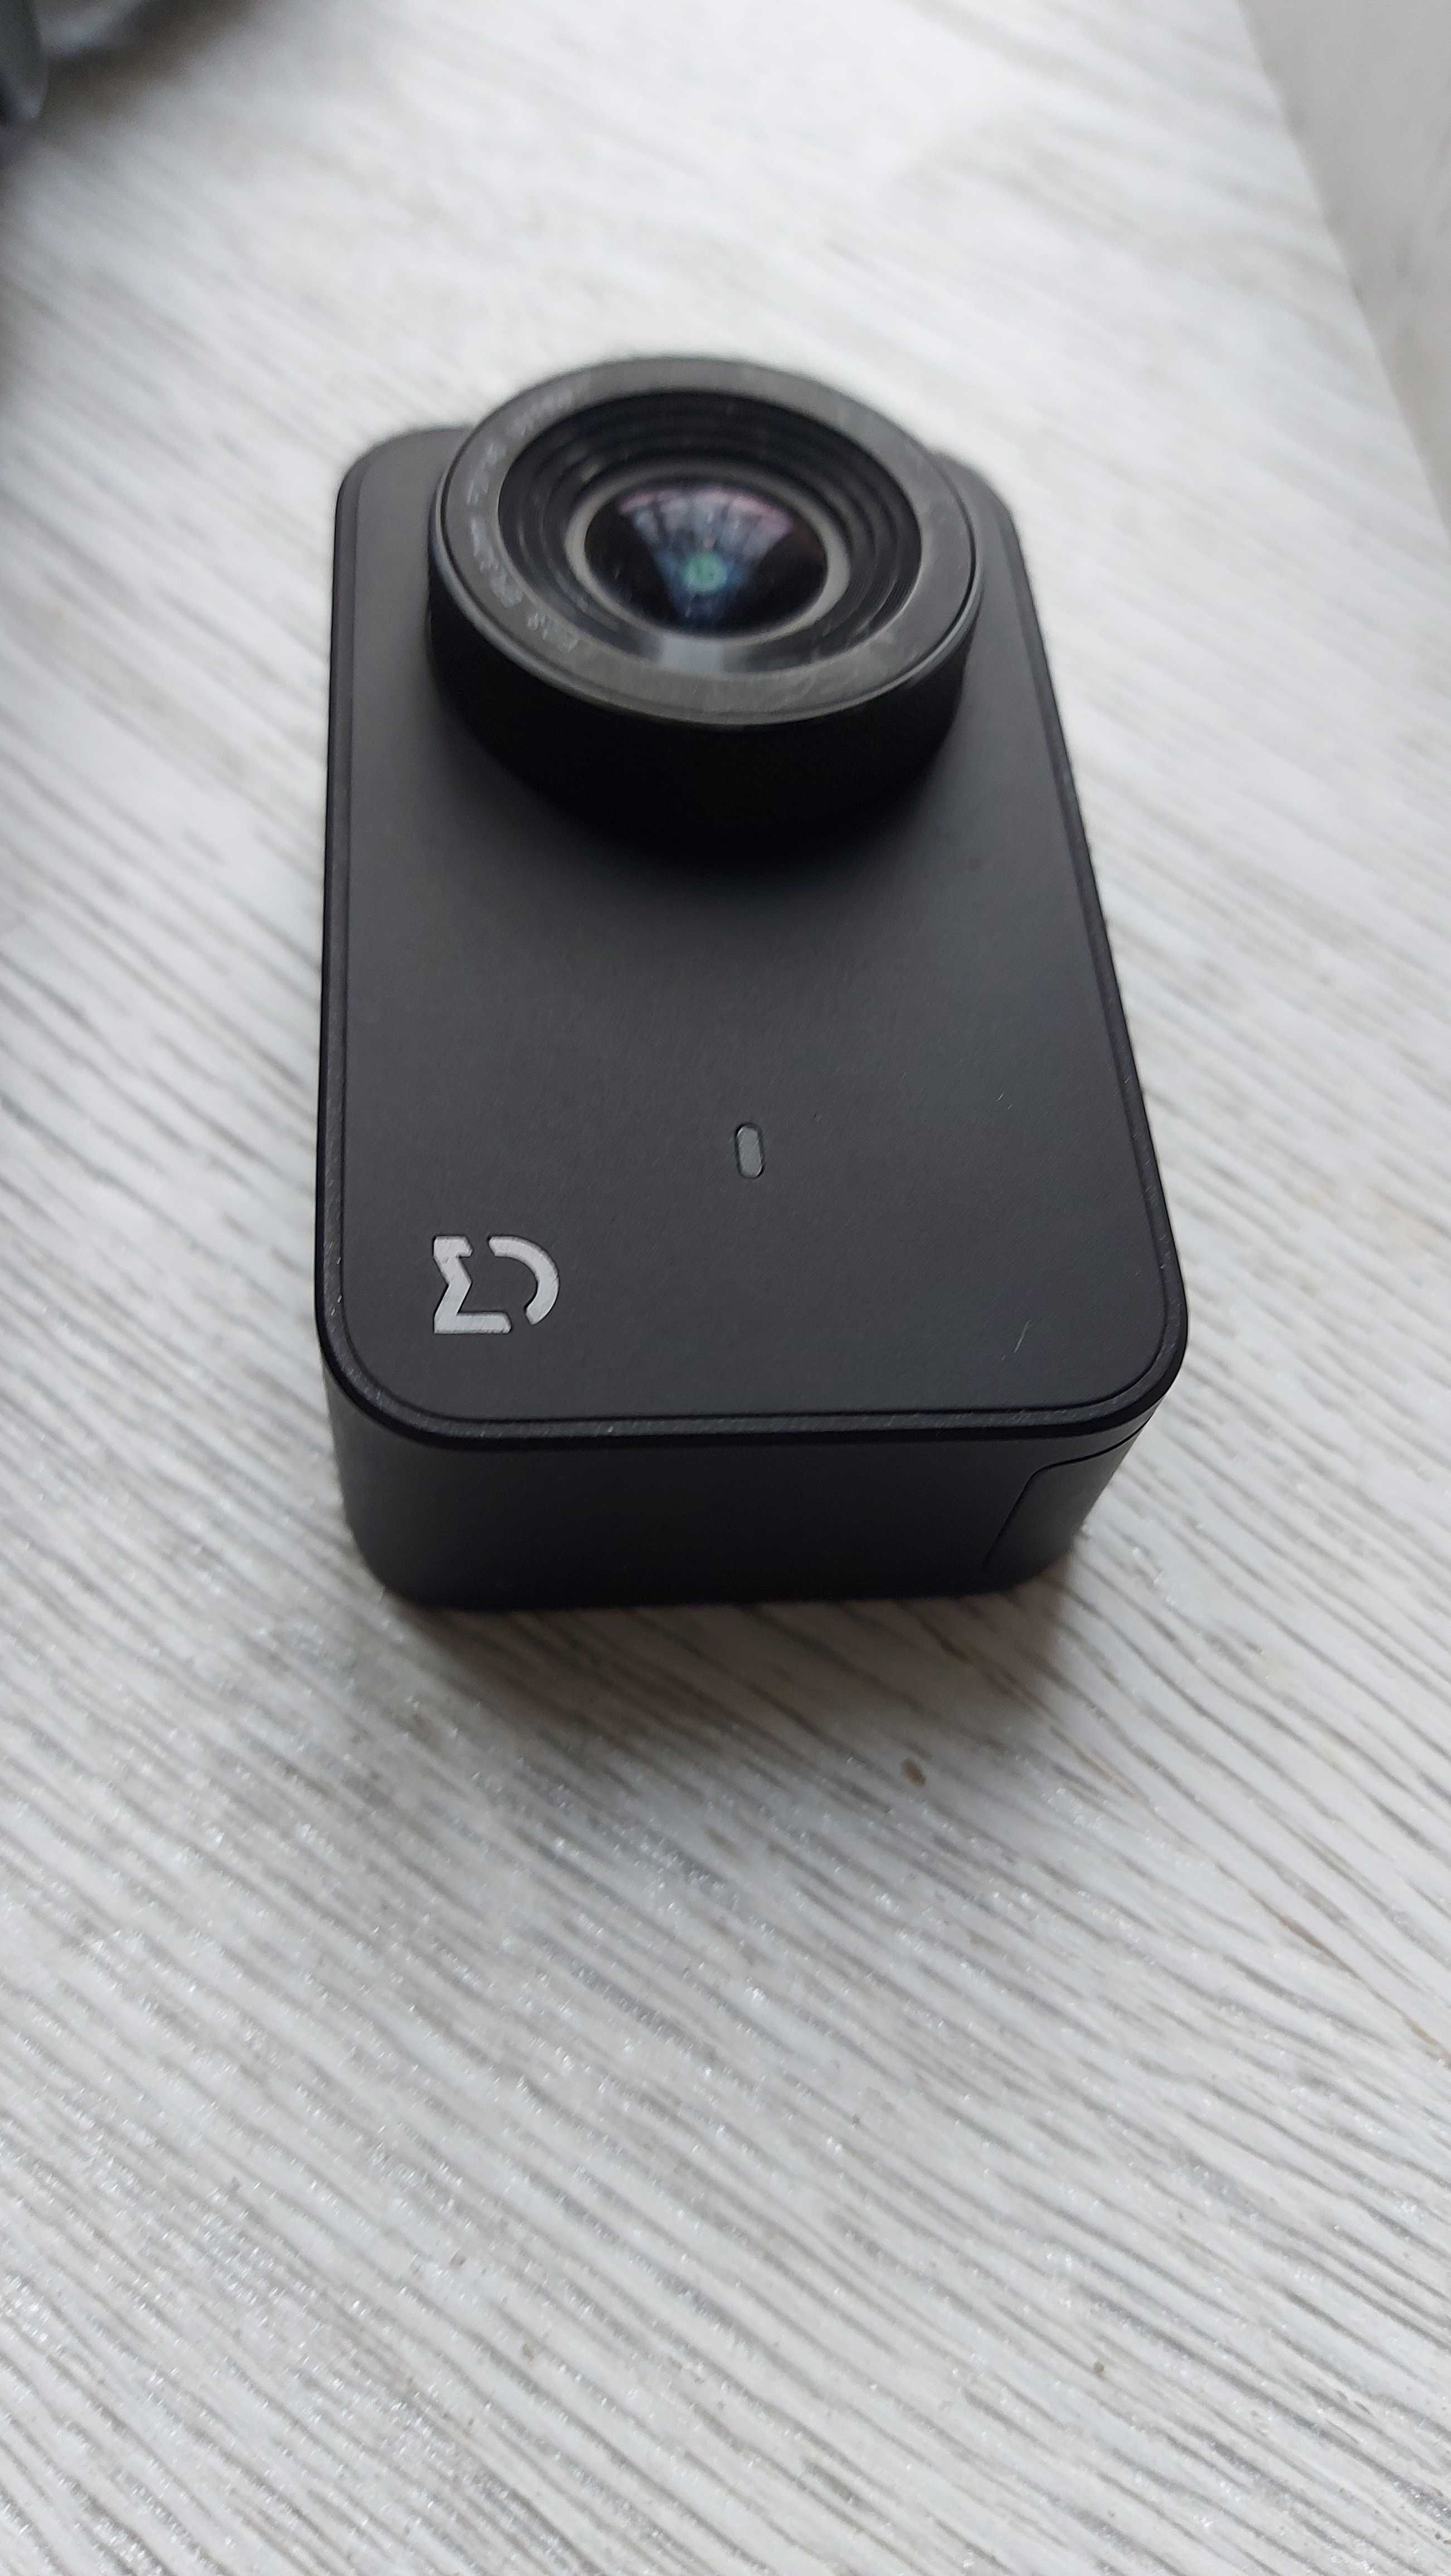 Екшн-камера Xiaomi Mijia Action Camera